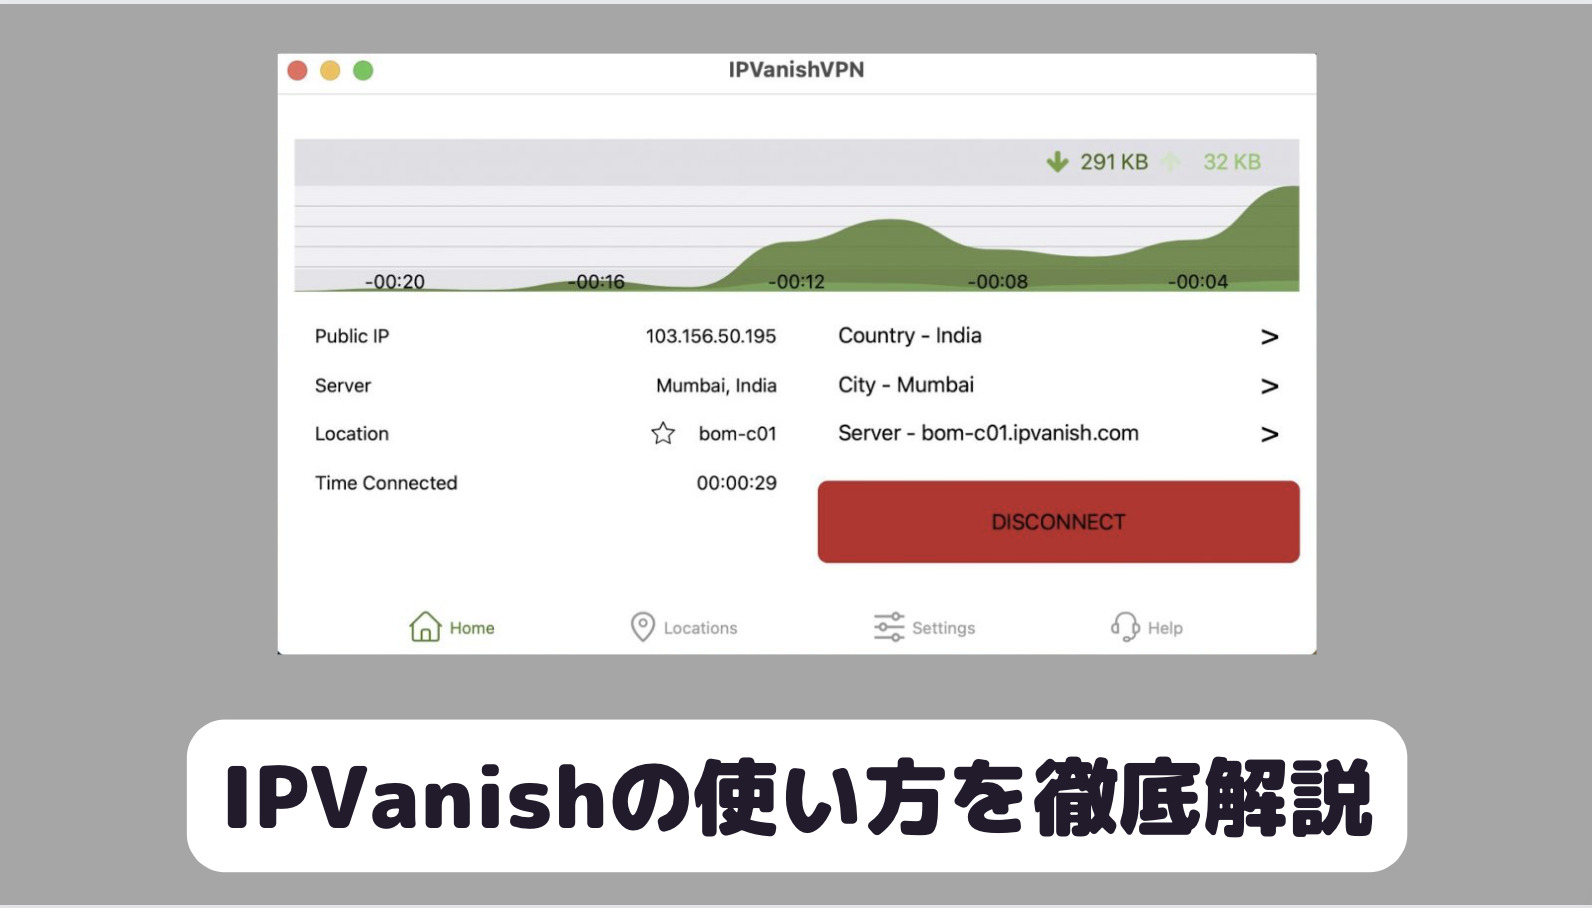 IPVanishの使い方【登録から設定まで】を細かく解説